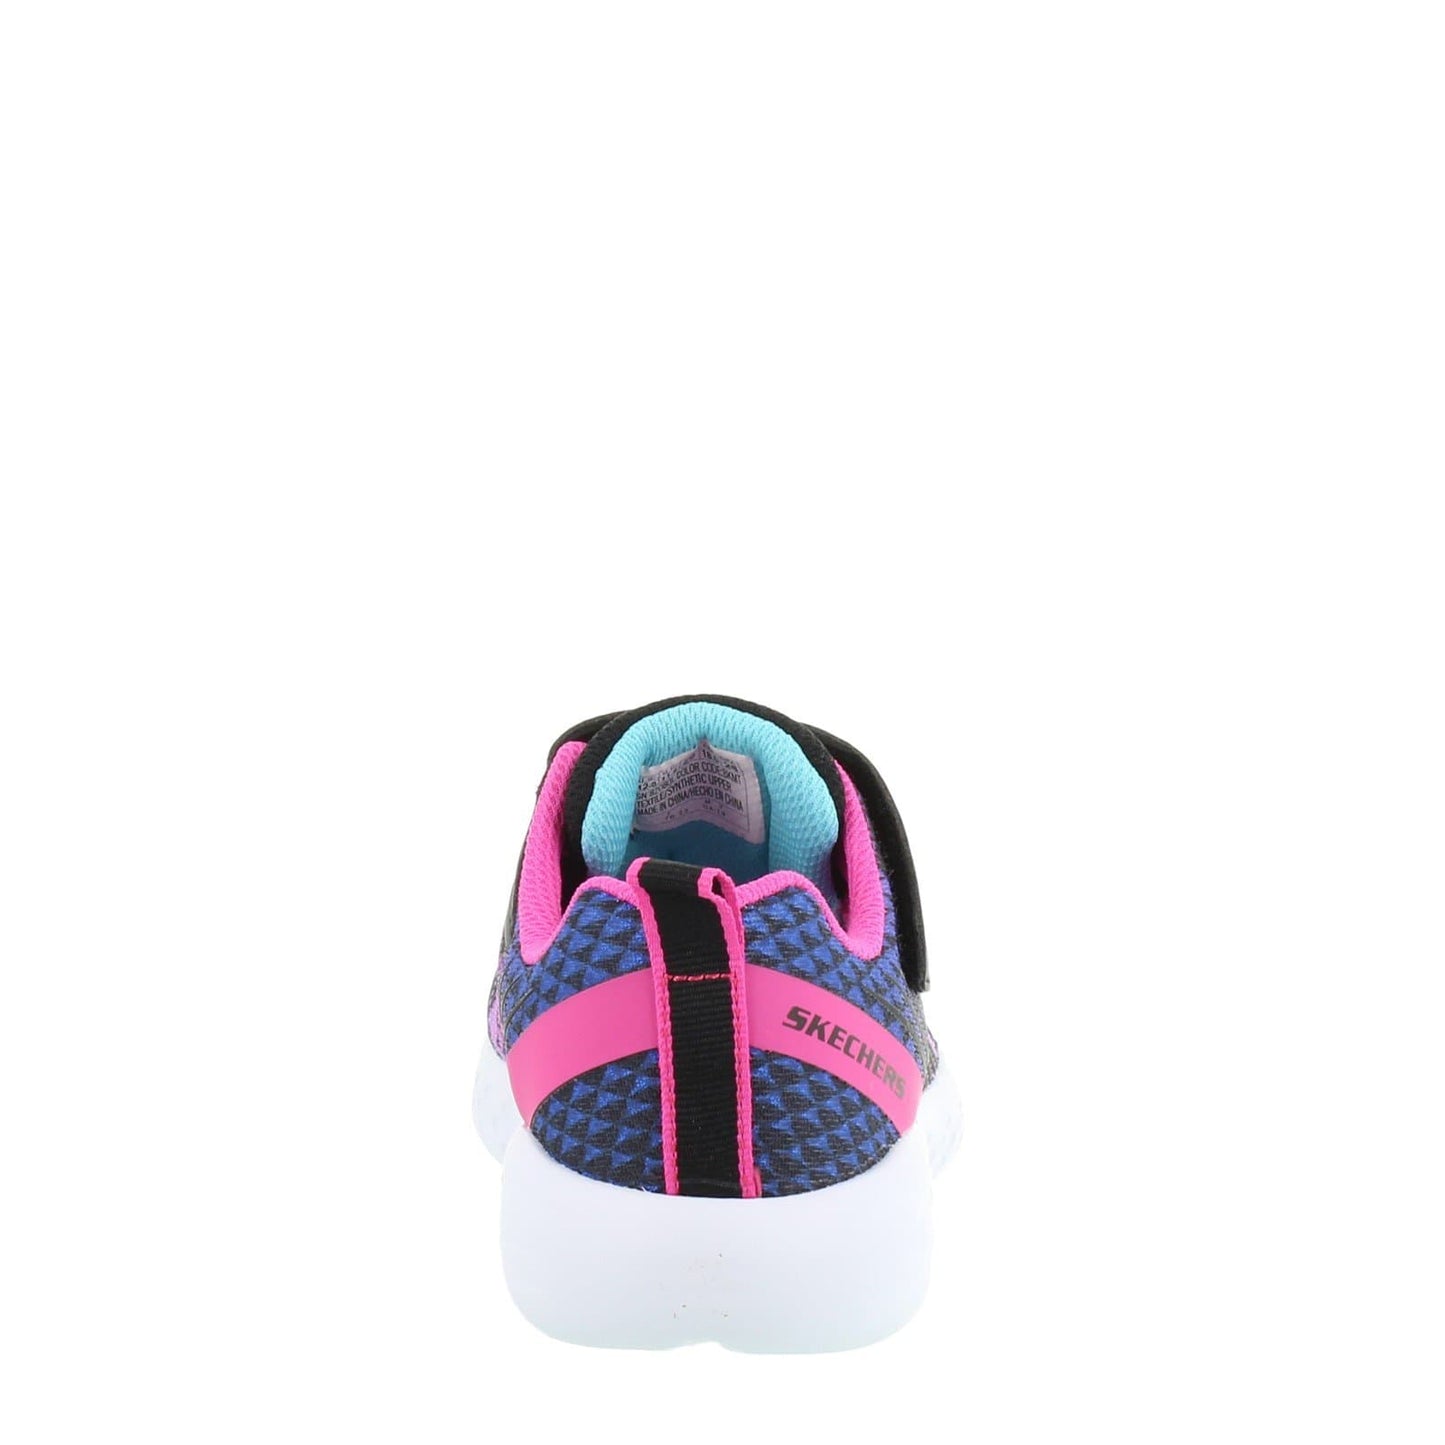 SKECHERS Kids Shoes 36 / Black / Multi-color Sneakers